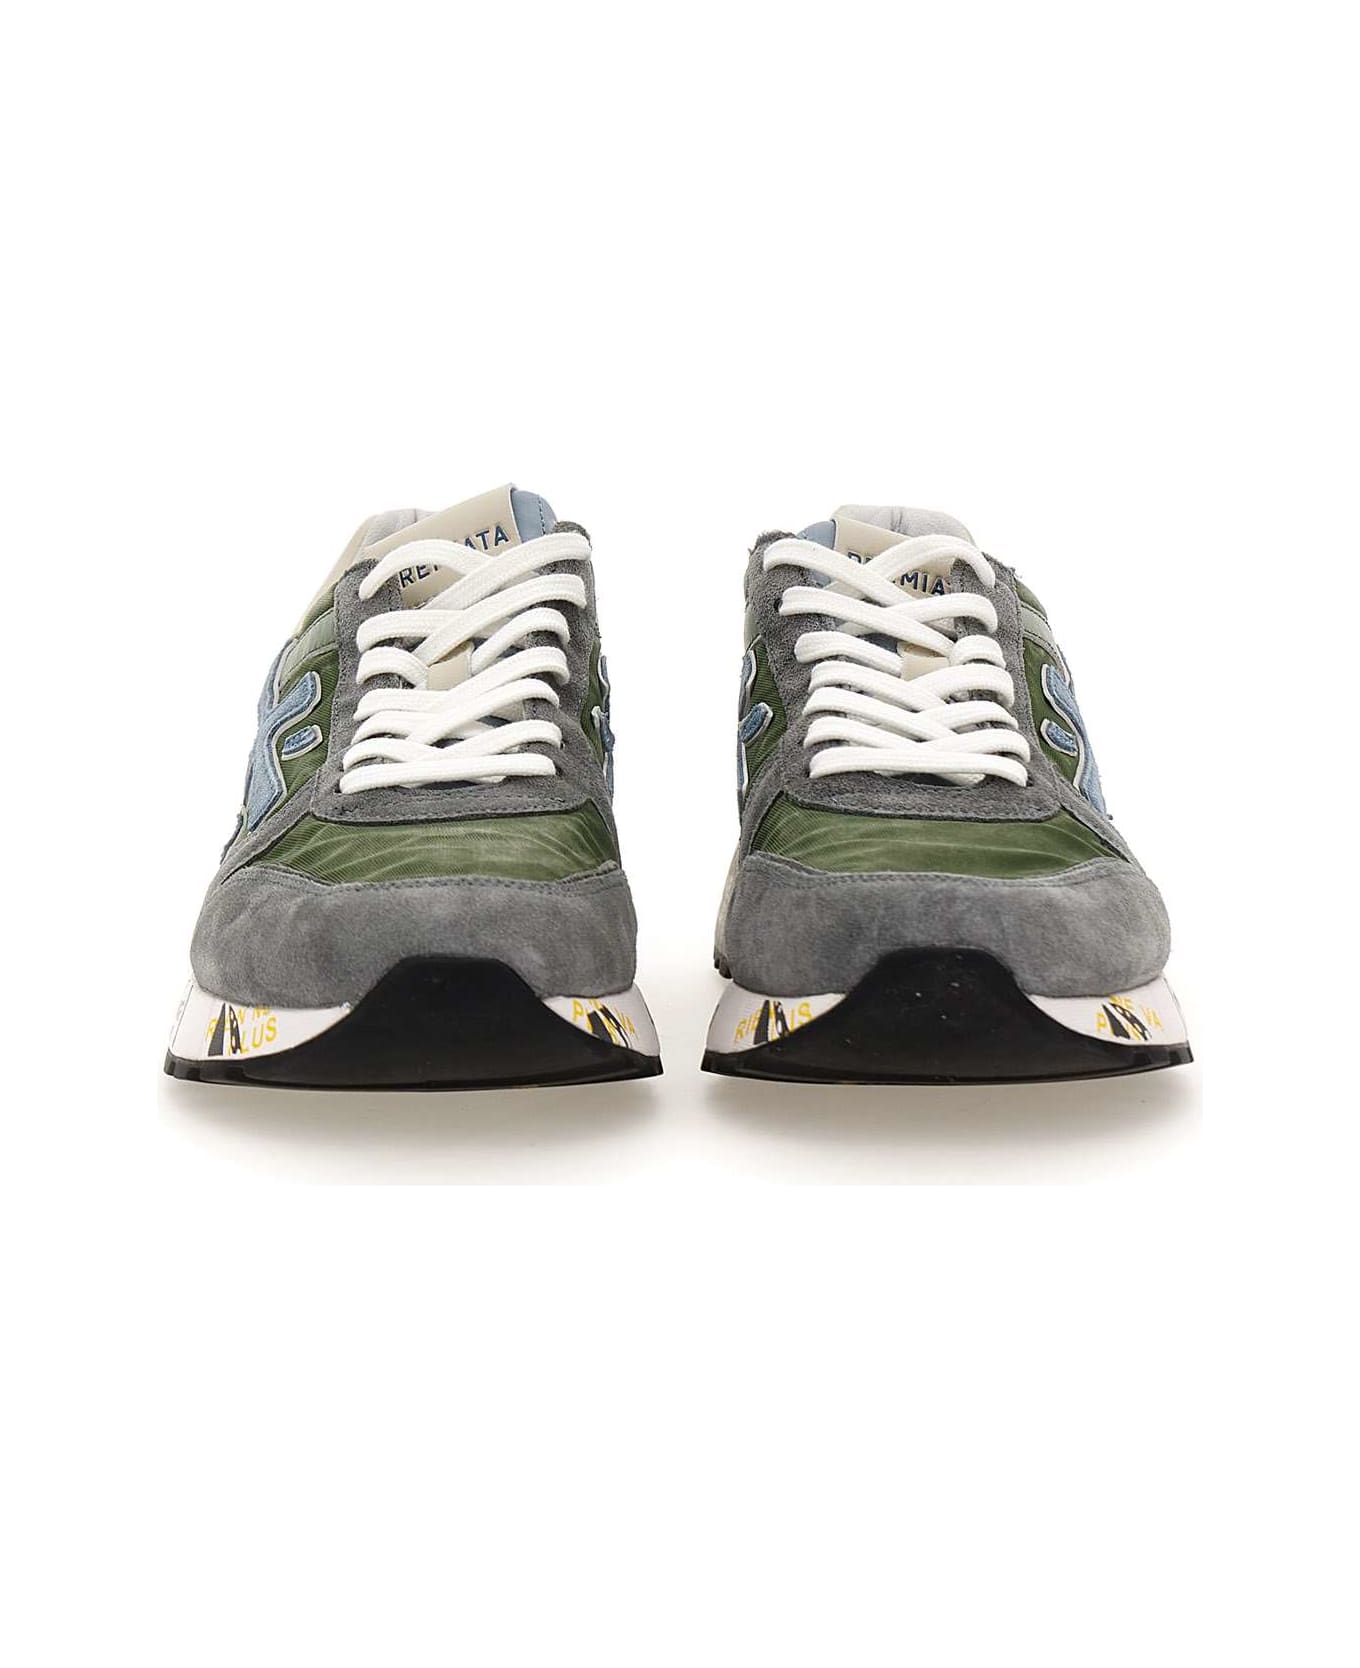 Premiata "mick 6617" Sneakers - Green/grey